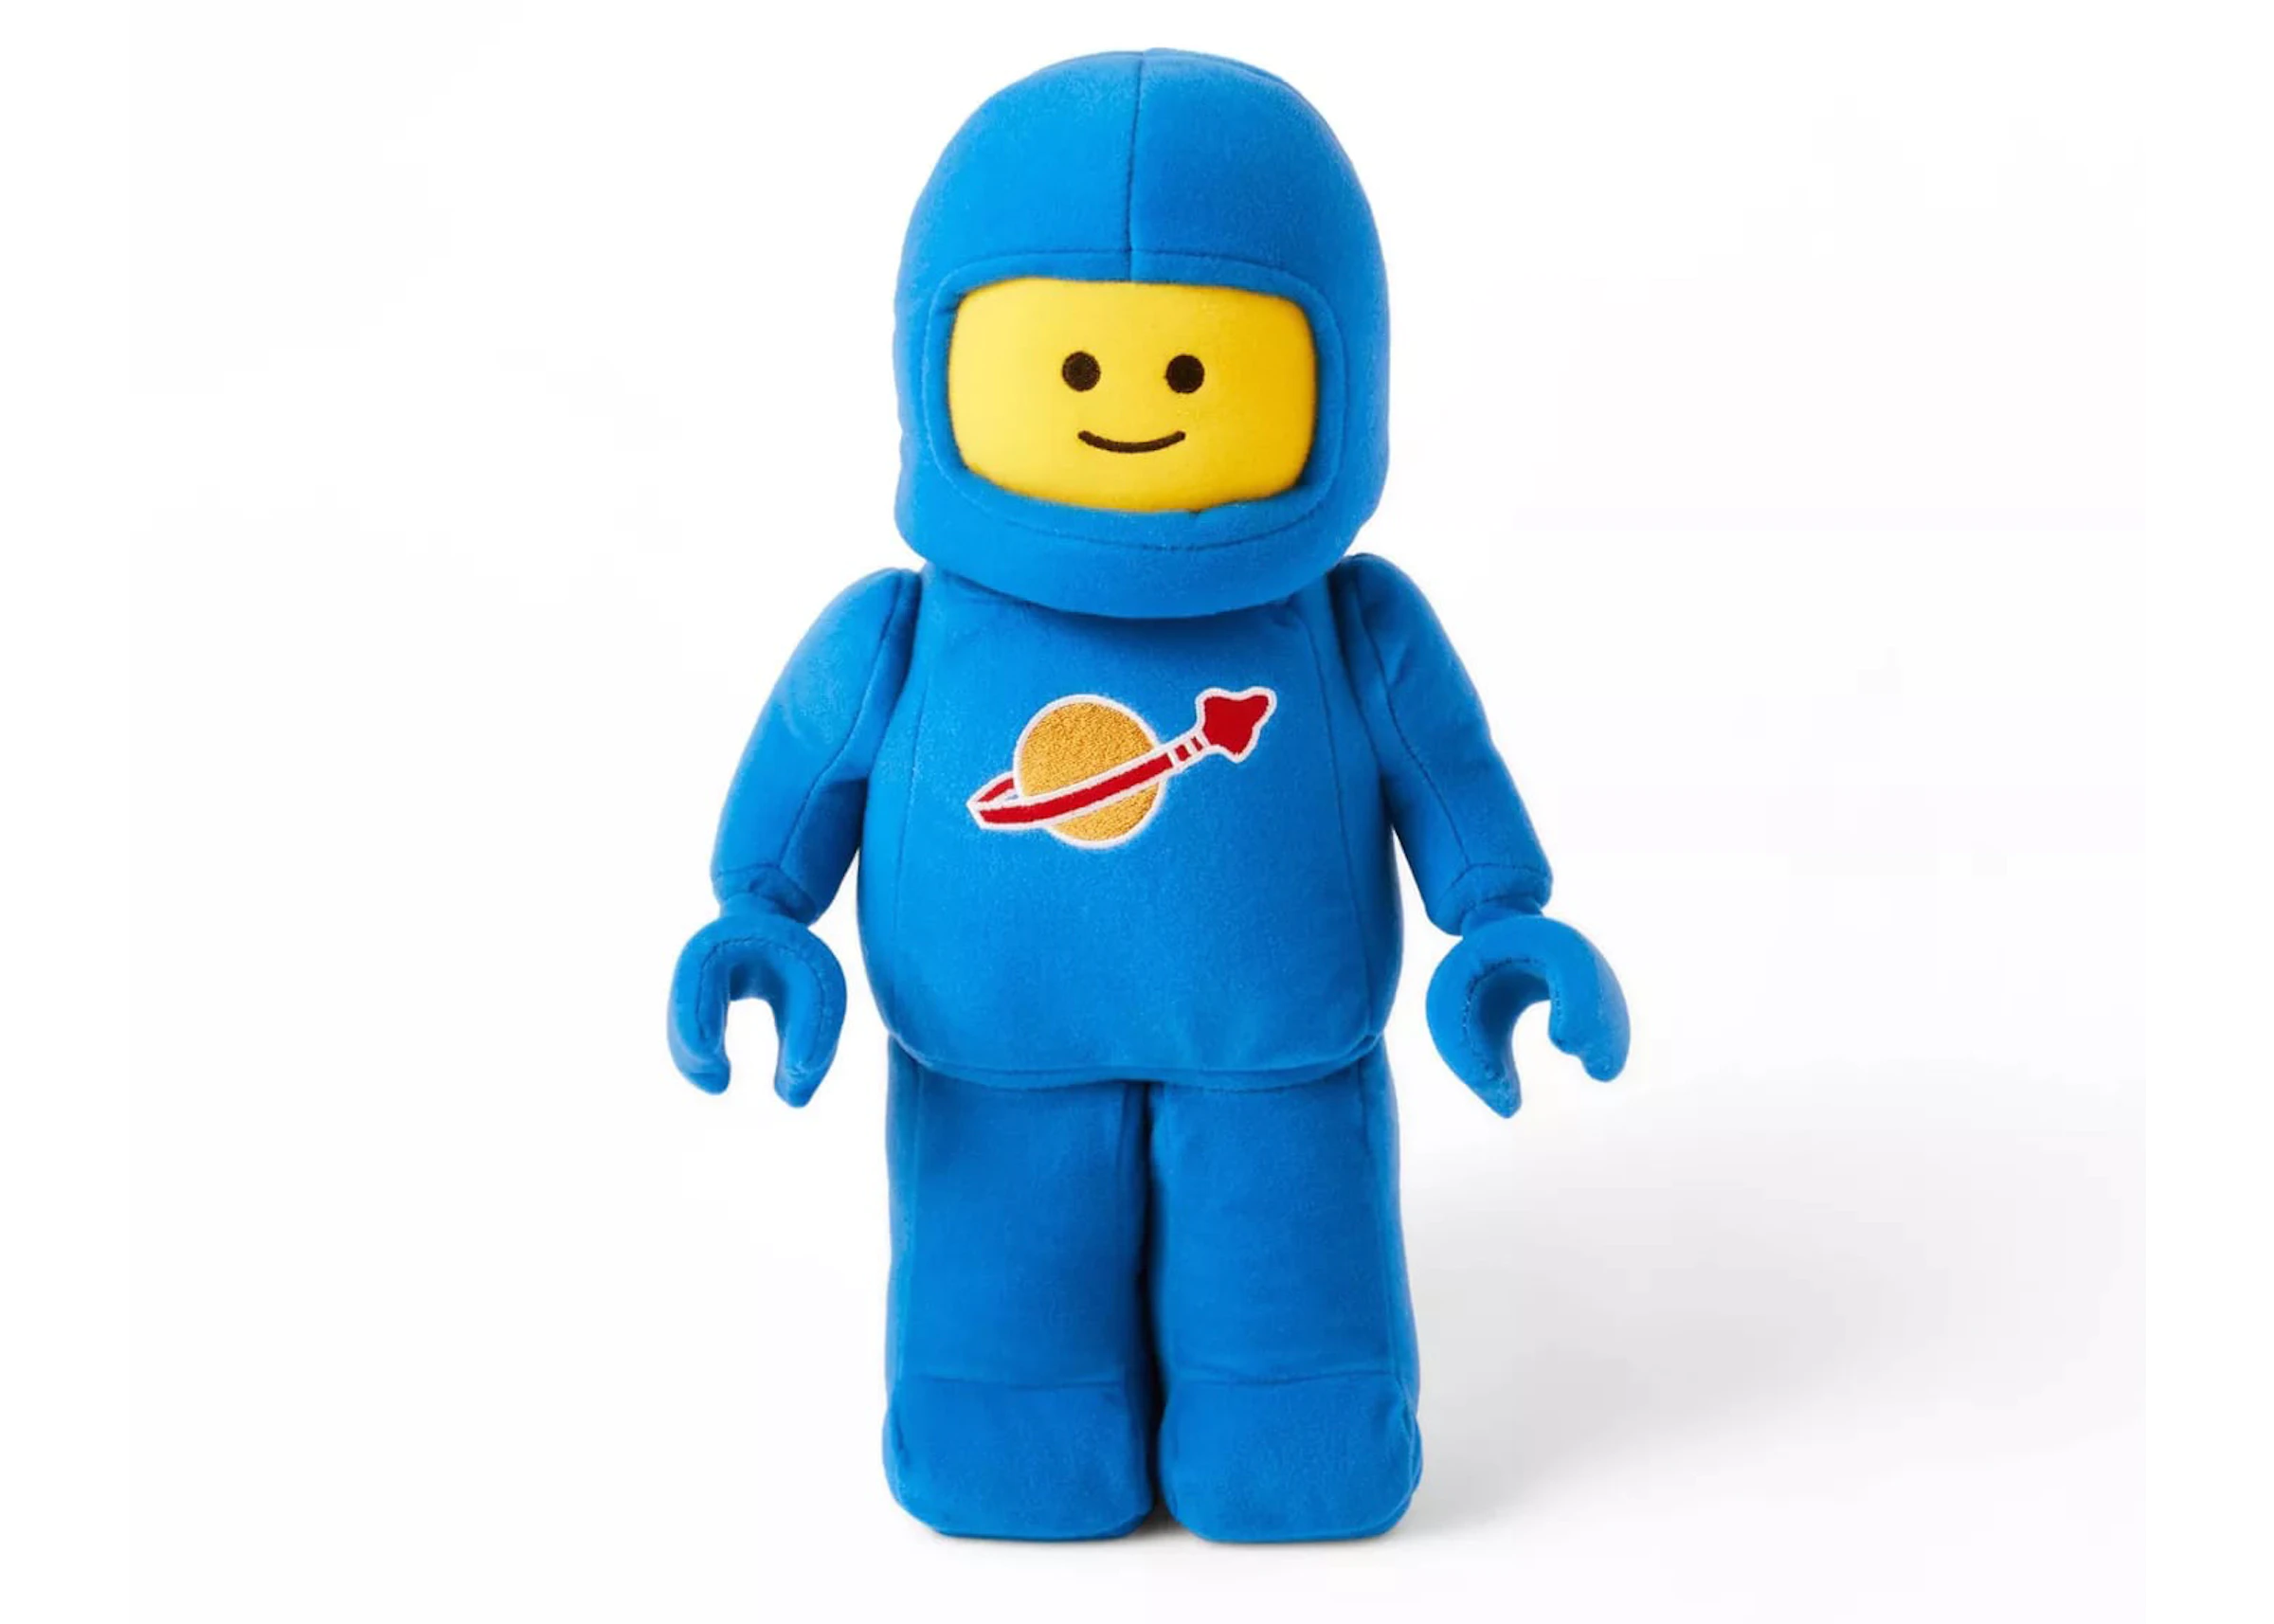 Vrouw crisis Convergeren LEGO Collection x Target Minifigure Astronaut Plush Blue - FW21 - US